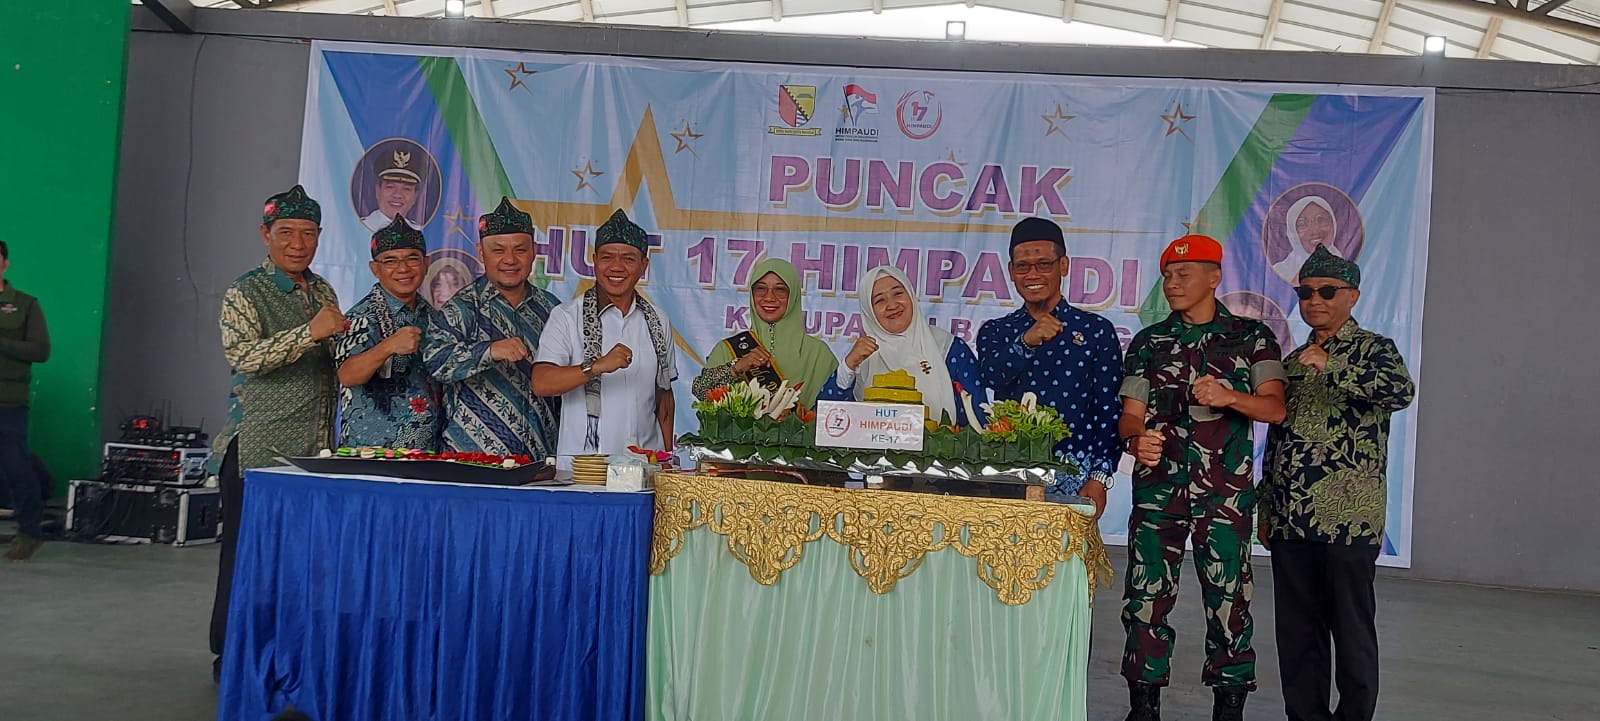 Kabupaten Bandung Pelopor Insentif Himpaudi, Peringati Hari Jadi ke 17